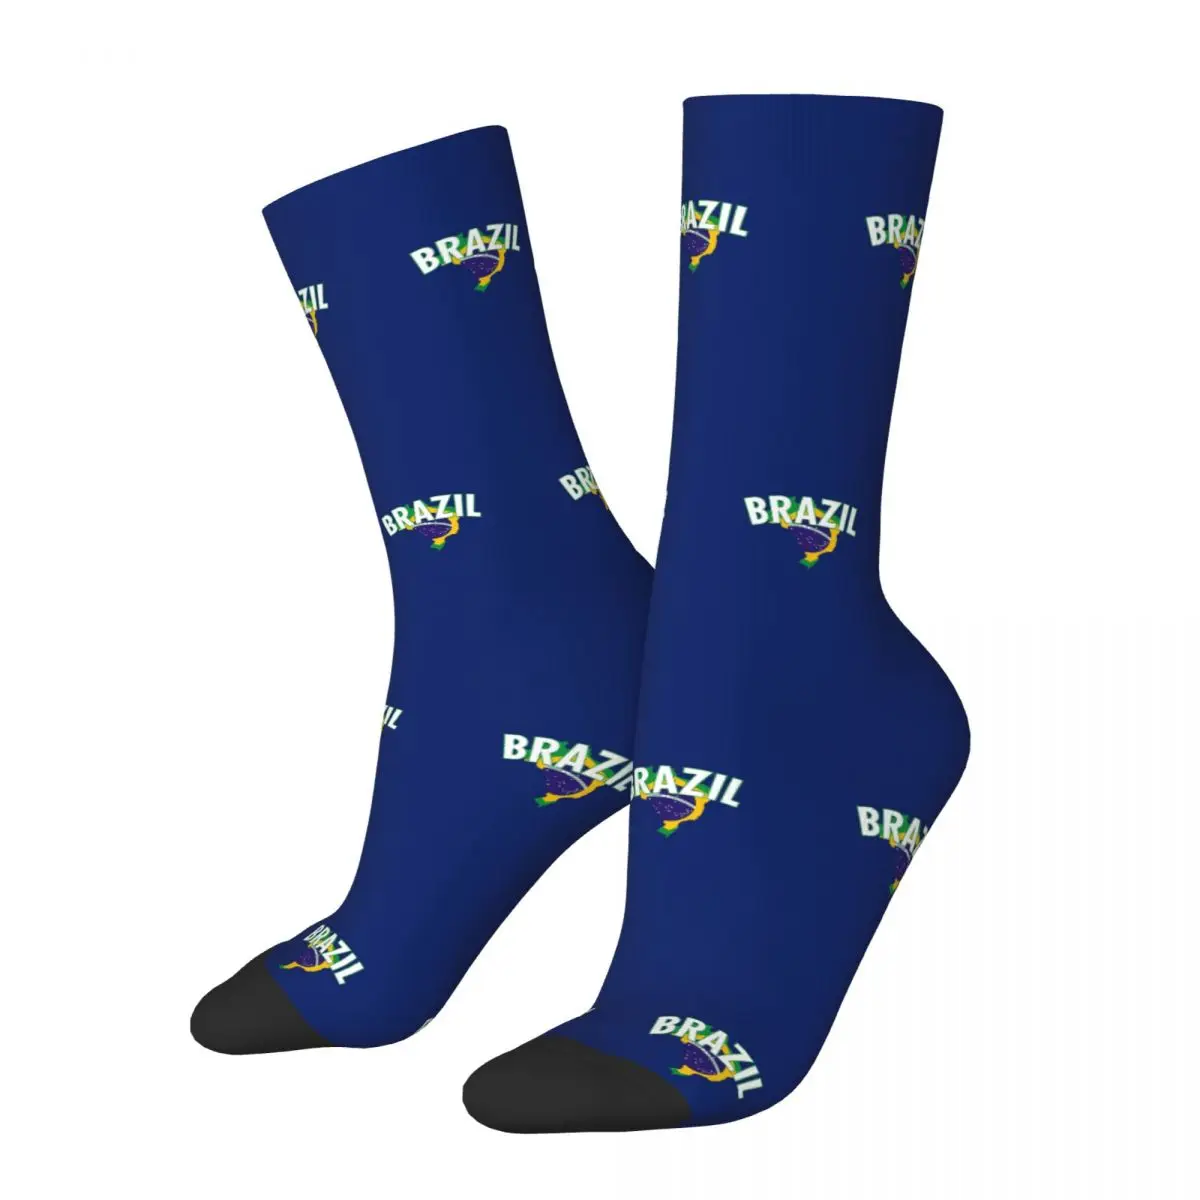 

Brazil National Flag Socks Harajuku High Quality Stockings All Season Long Socks Accessories for Unisex Gifts